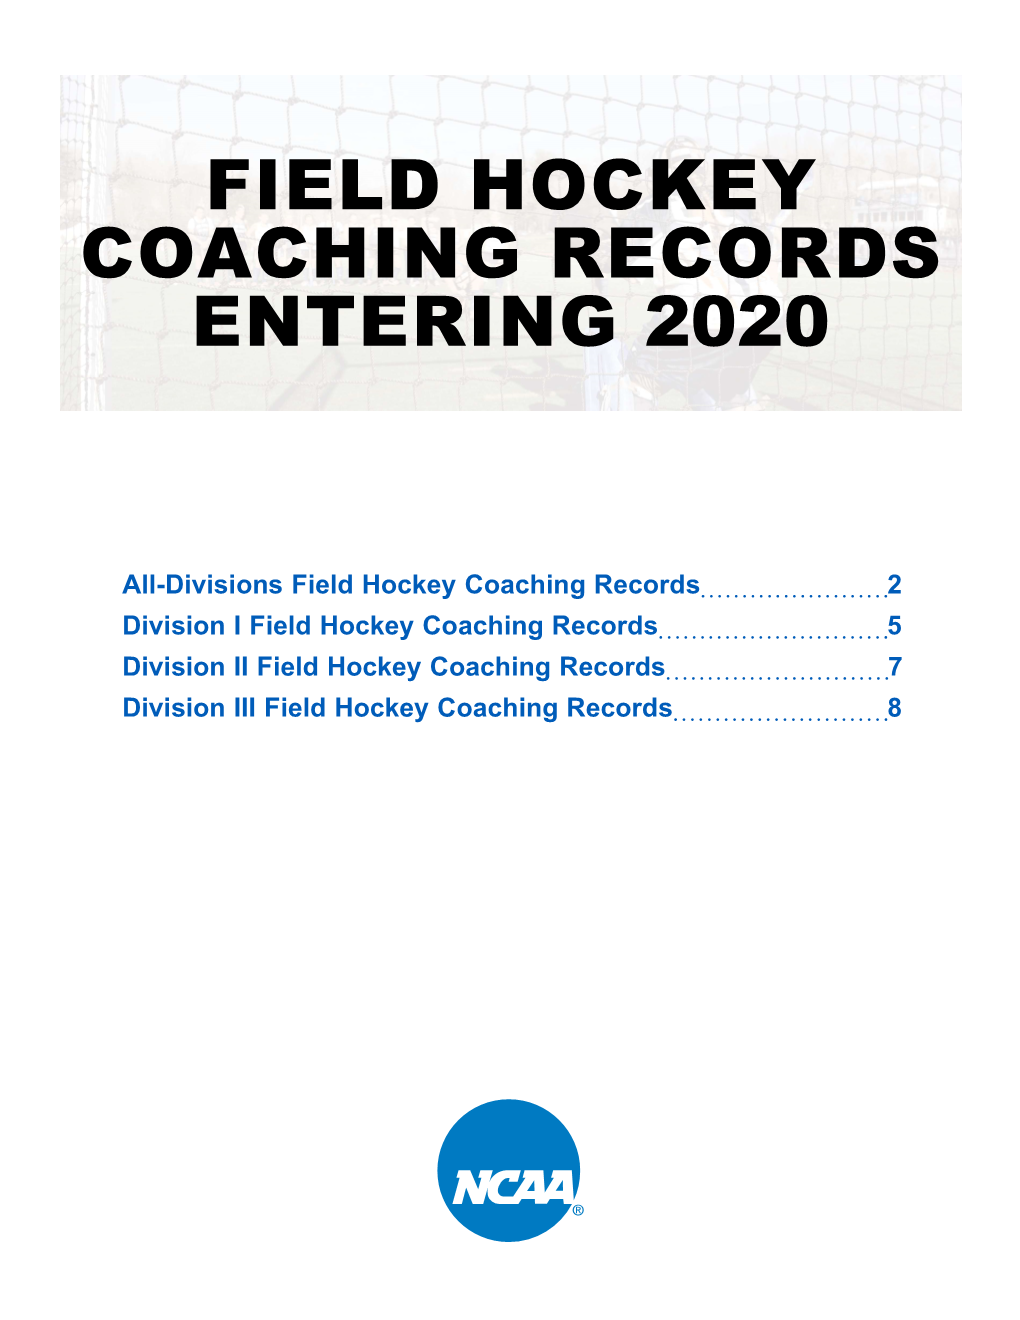 Coaching Records Entering 2020